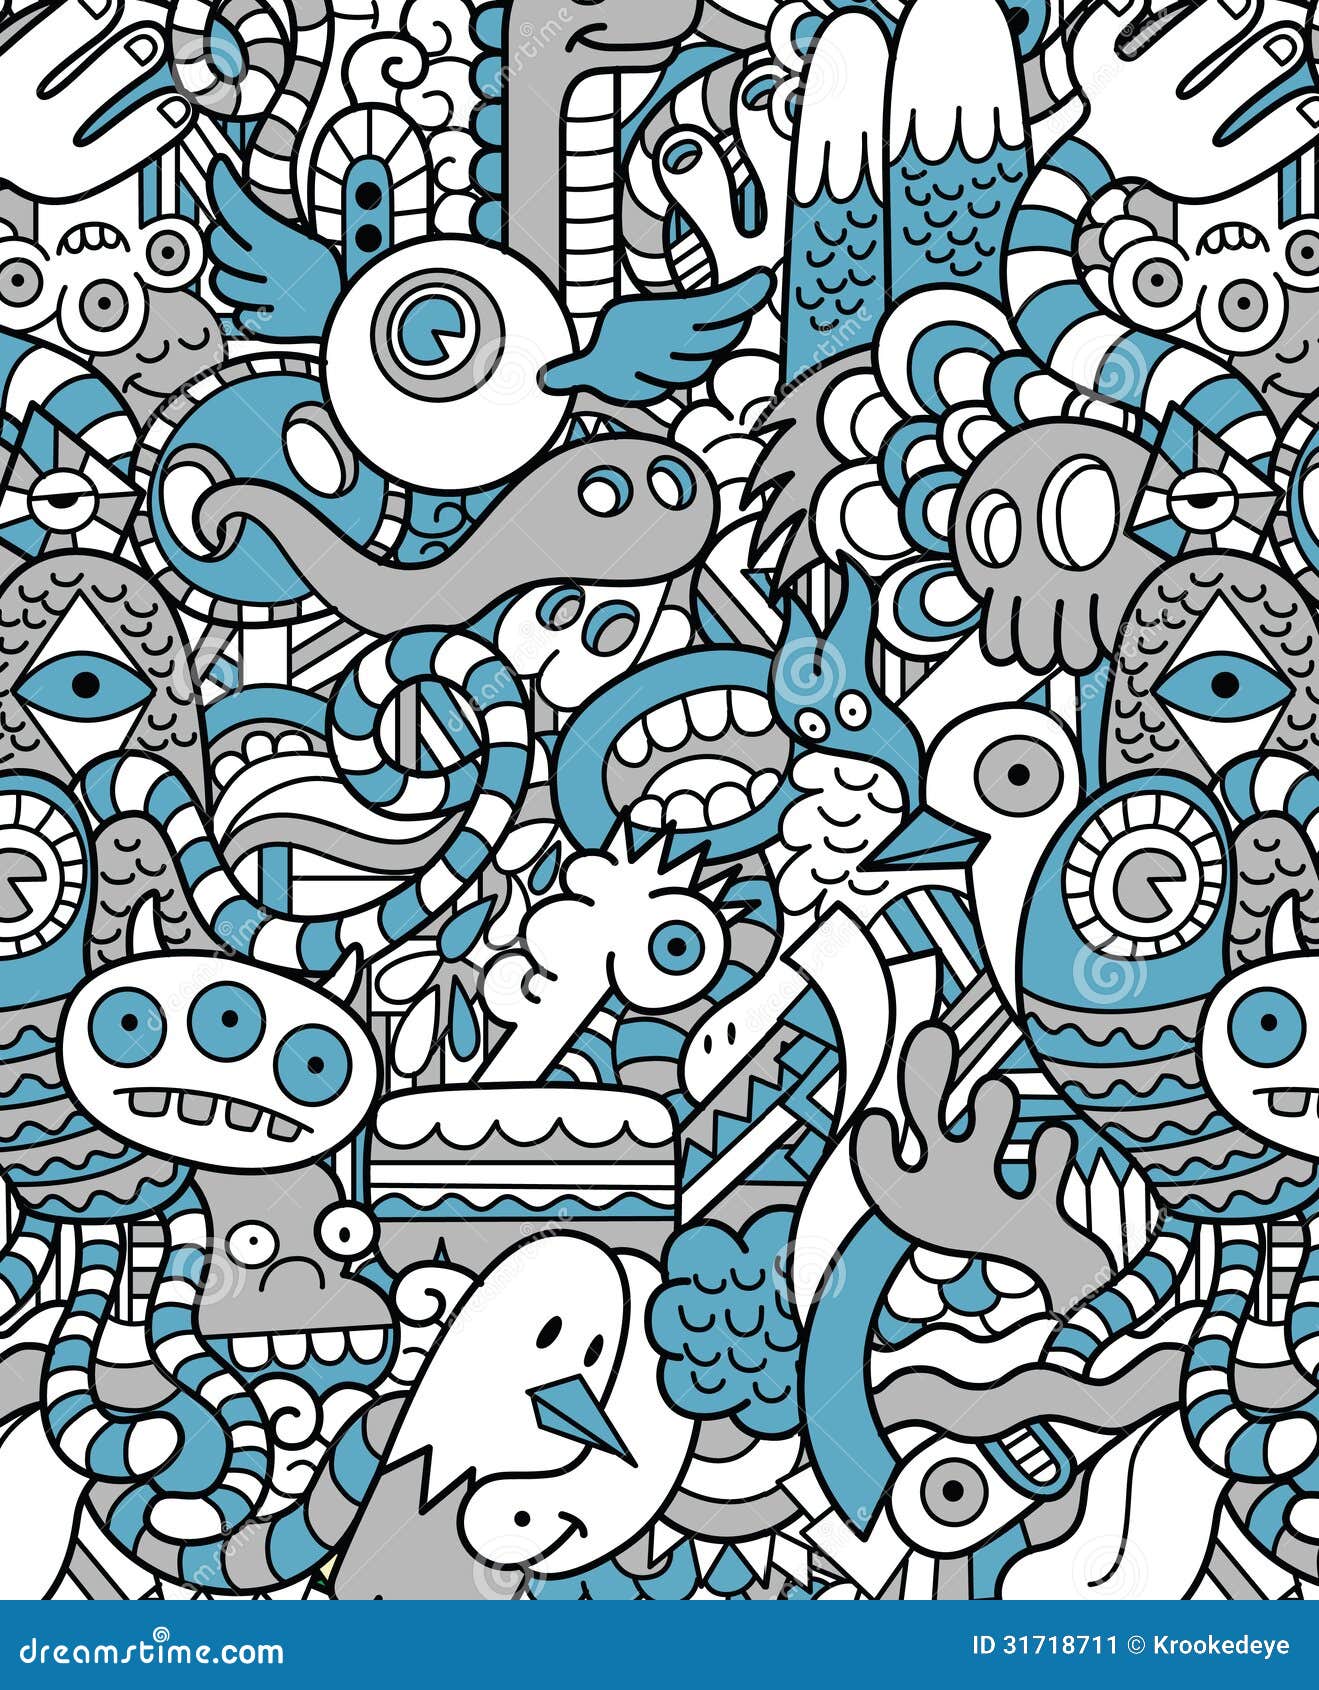 doodle art monster wallpaper hd